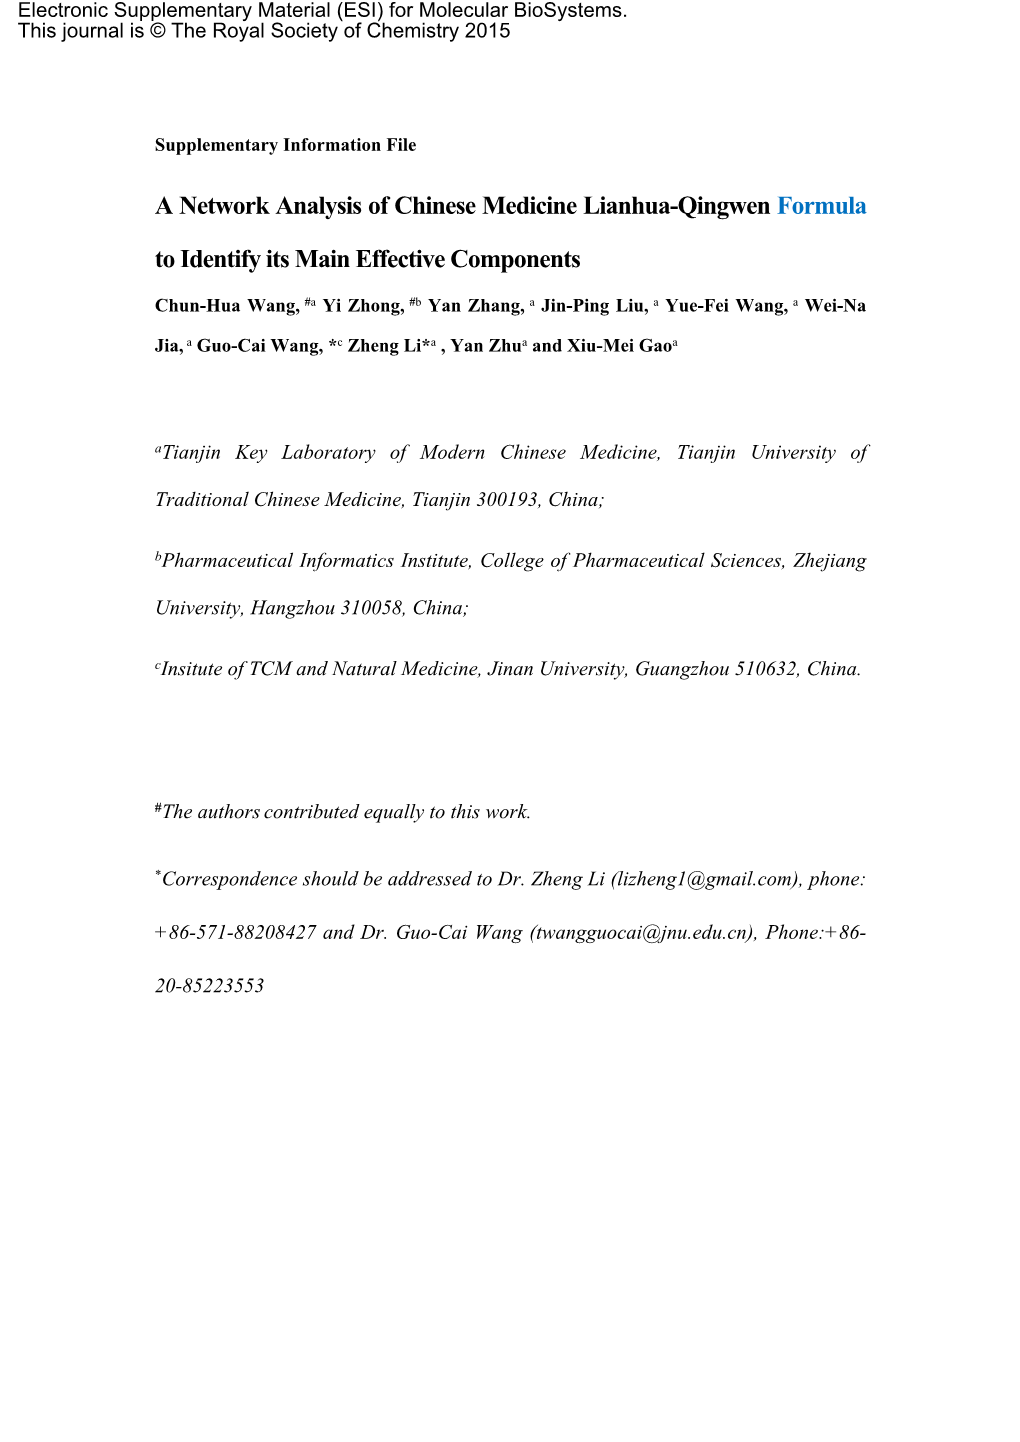 A Network Analysis of Chinese Medicine Lianhua-Qingwen Formula